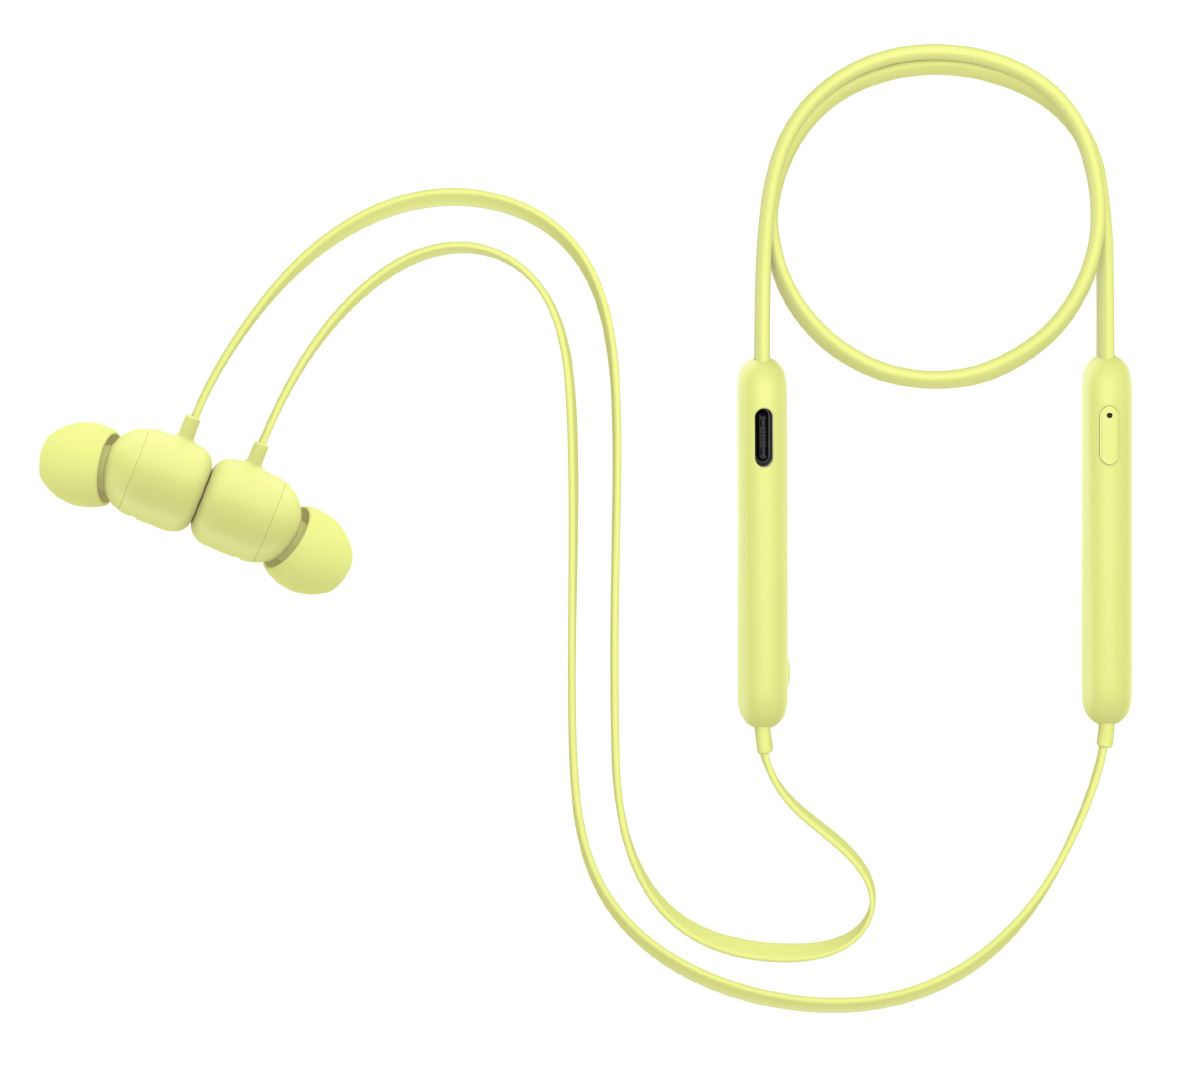 Beats Flex Wireless Headphones Review